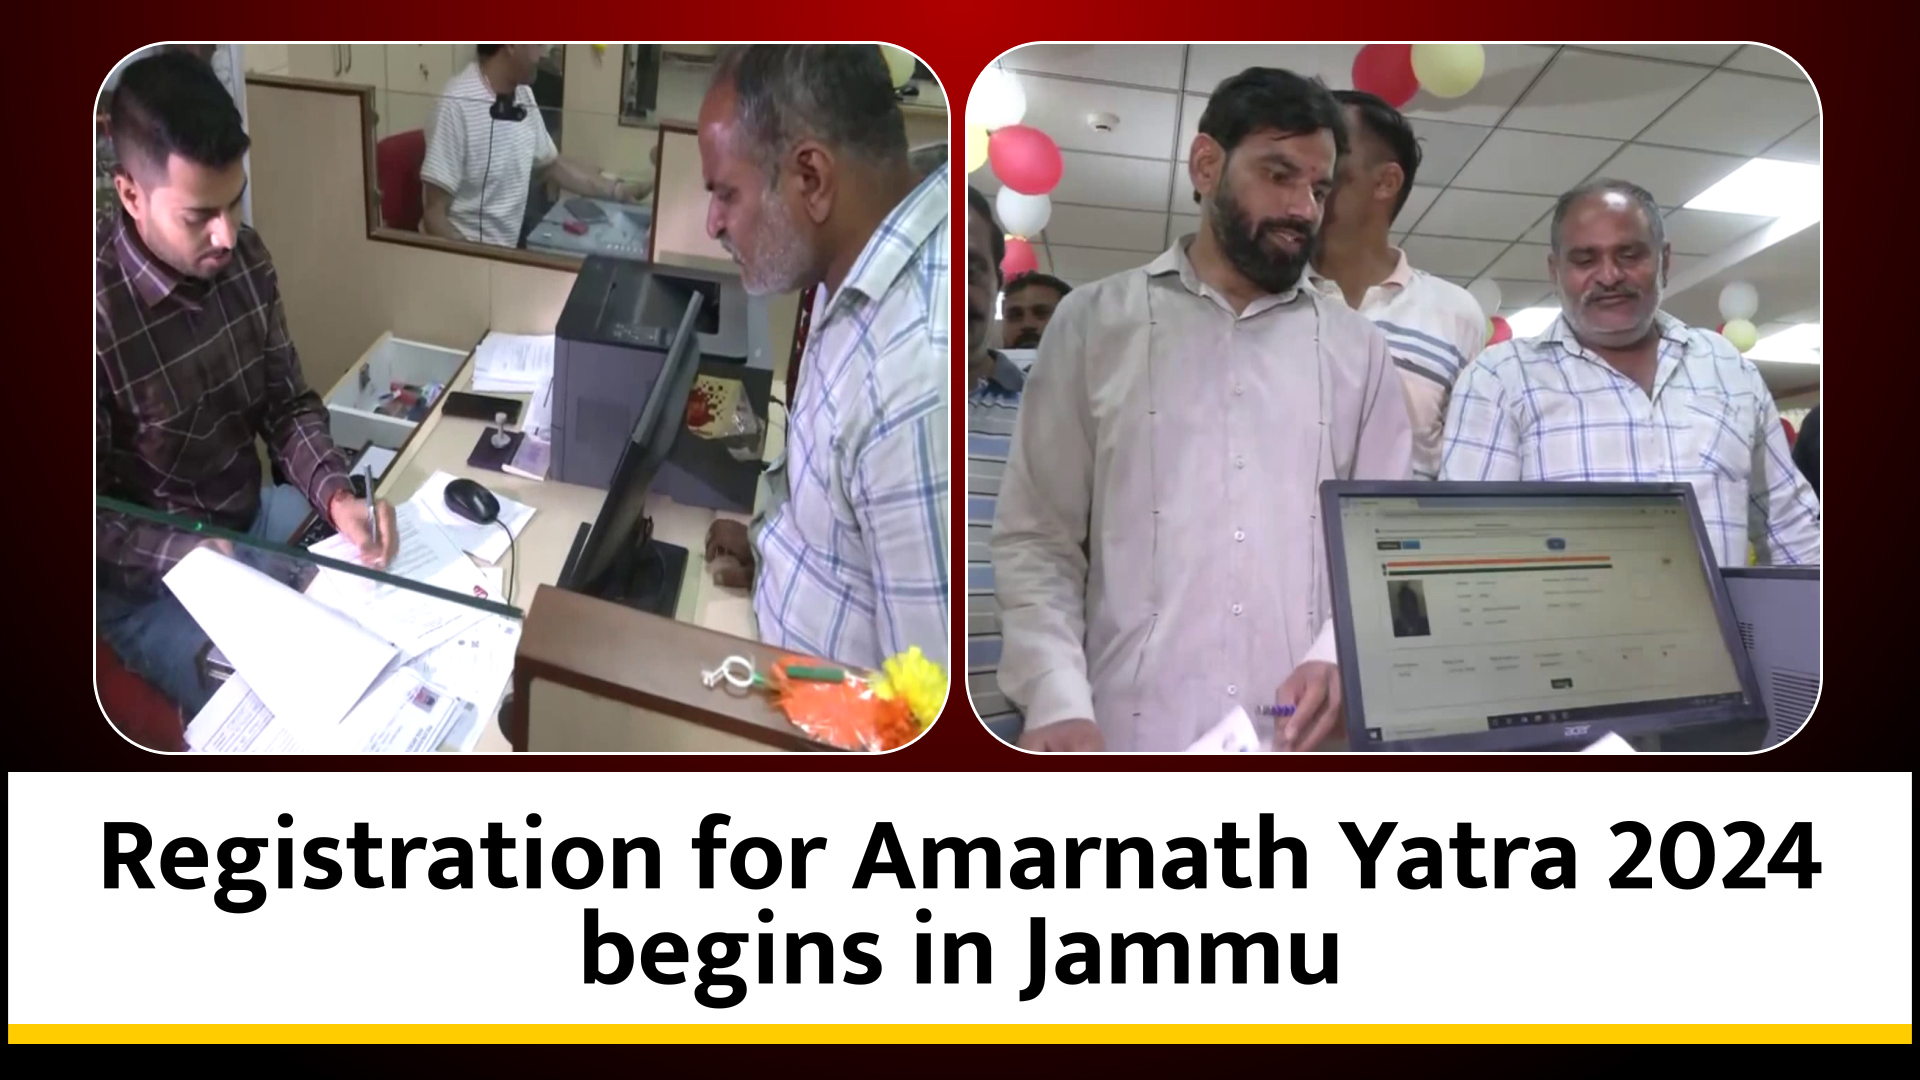 Registration for Amarnath Yatra 2024 begins in Jammu